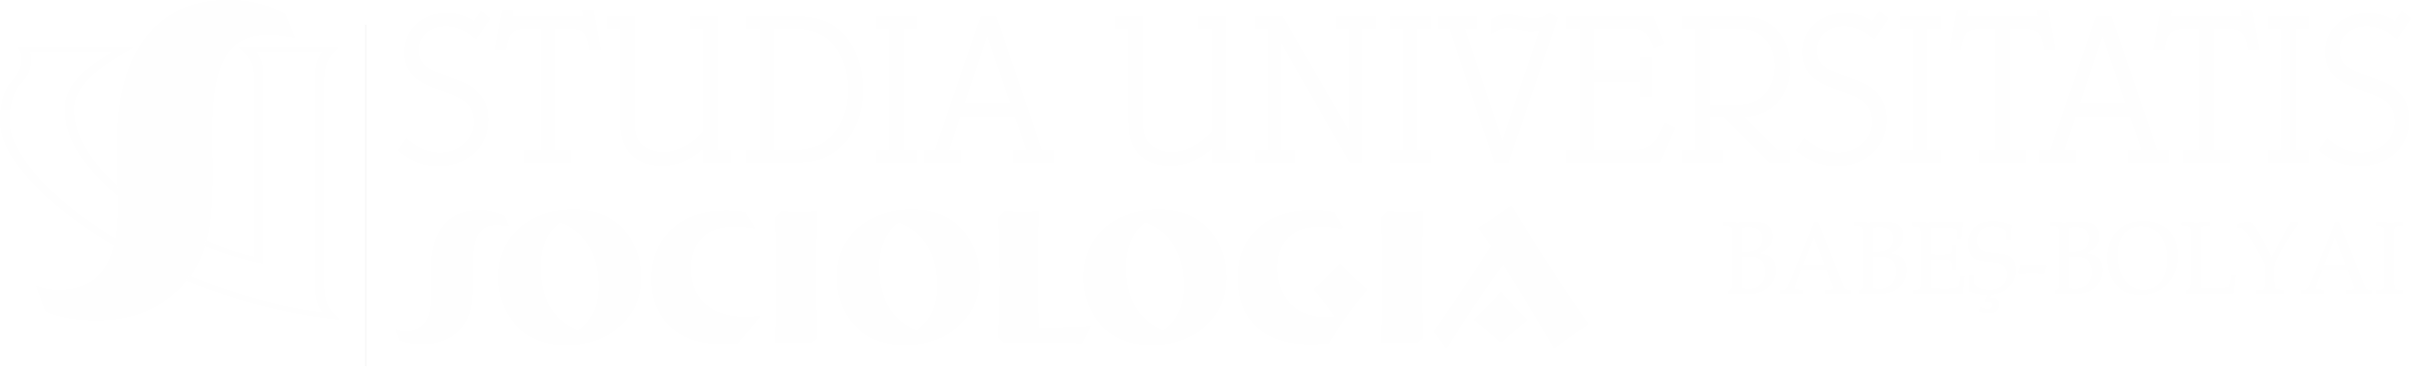 Studia Universitatis Babeș-Bolyai Sociologia, Babeş-Bolyai University, Cluj-Napoca, Romania